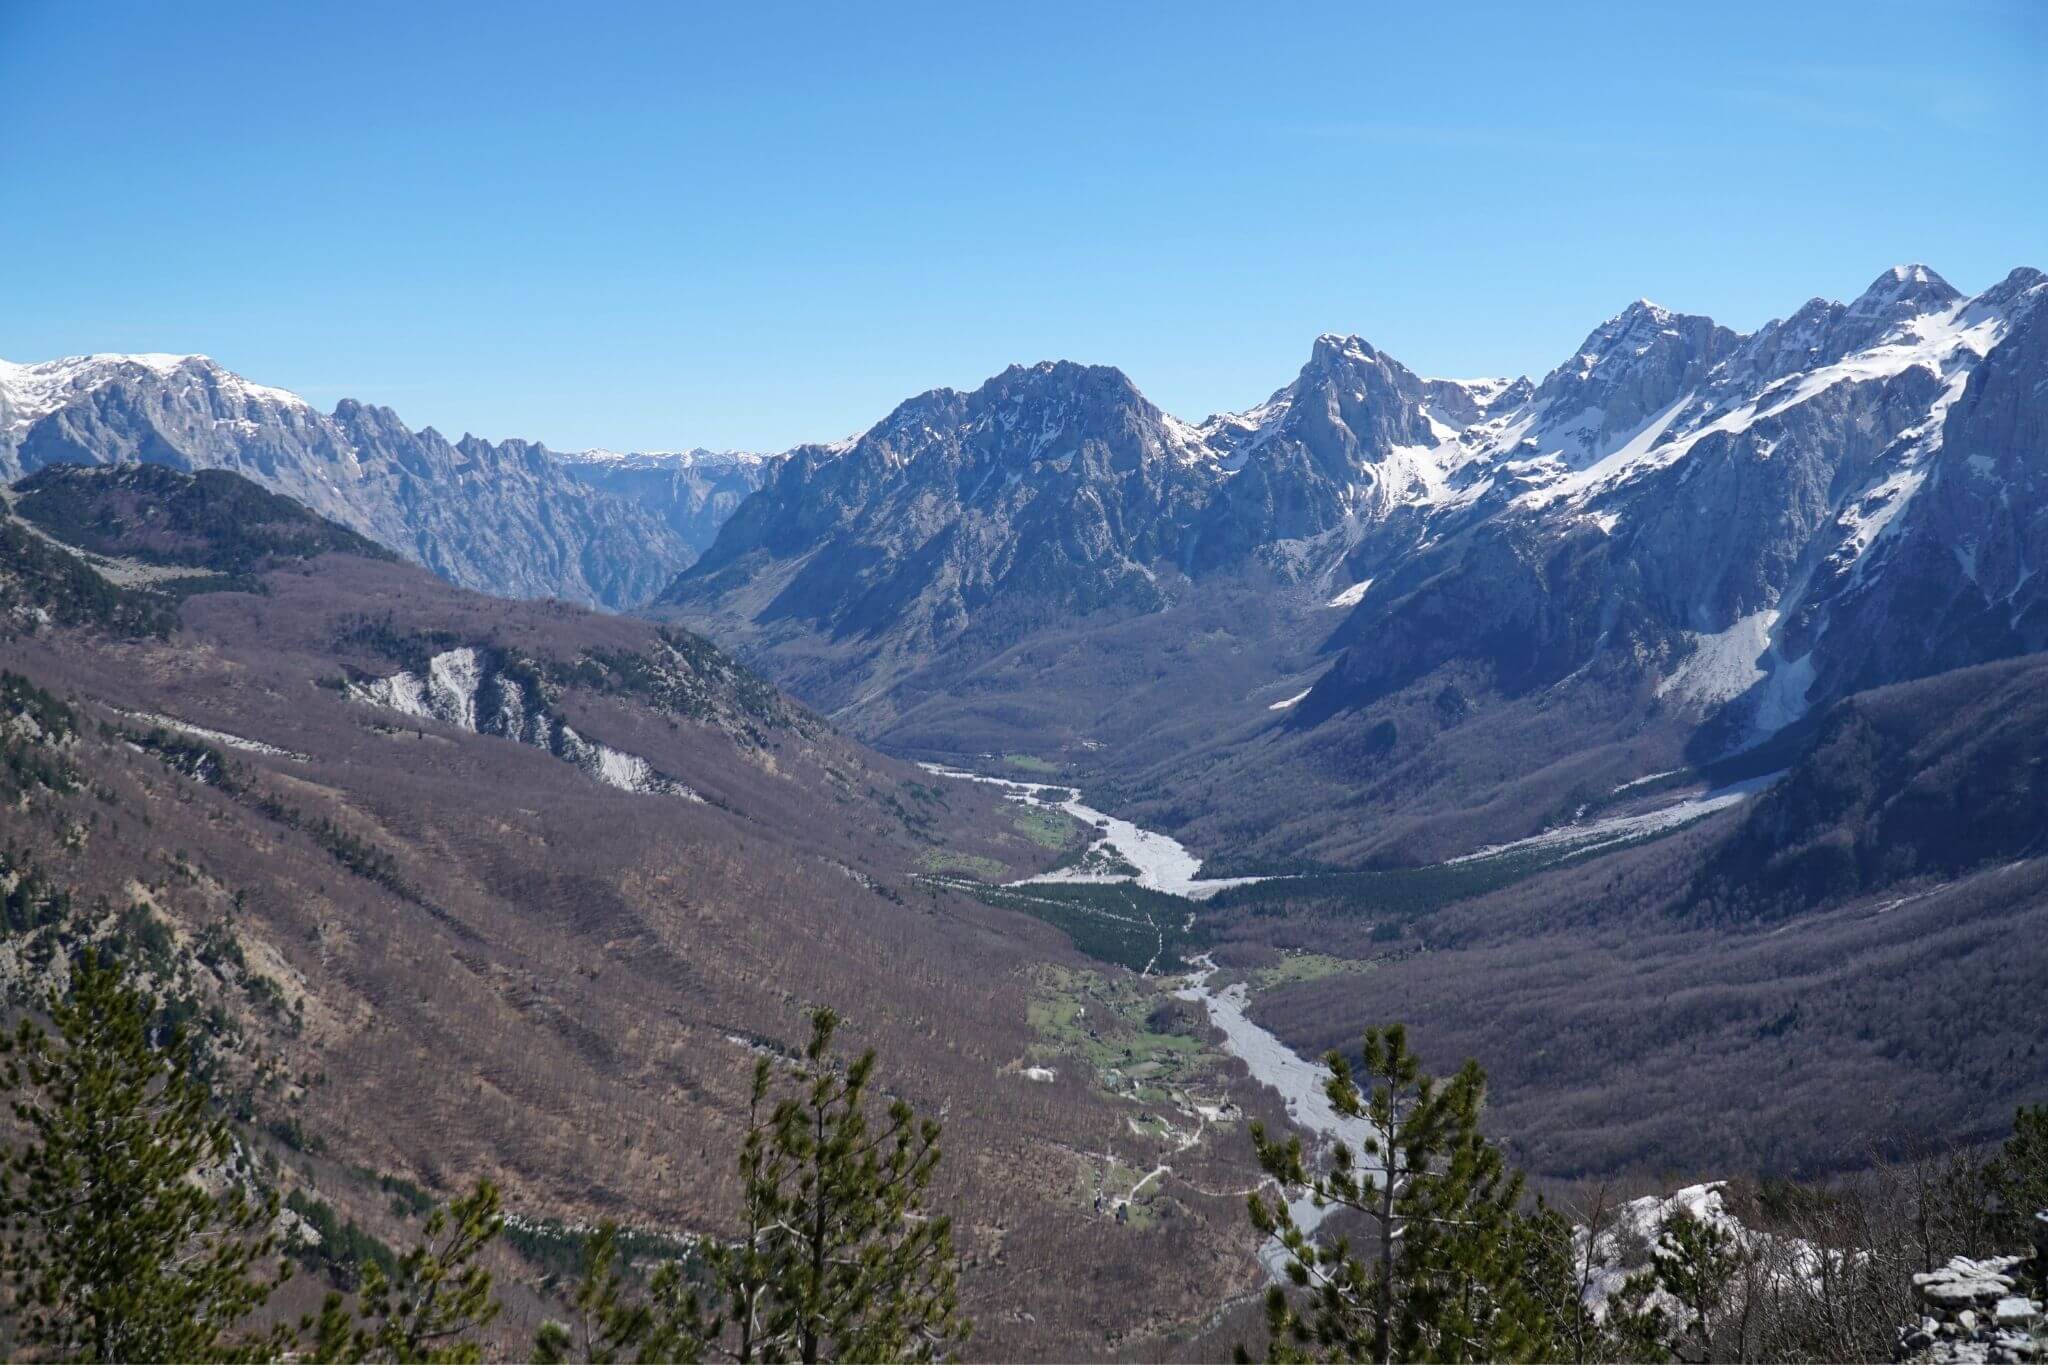 View of Valbona Valley & surrounding mountains